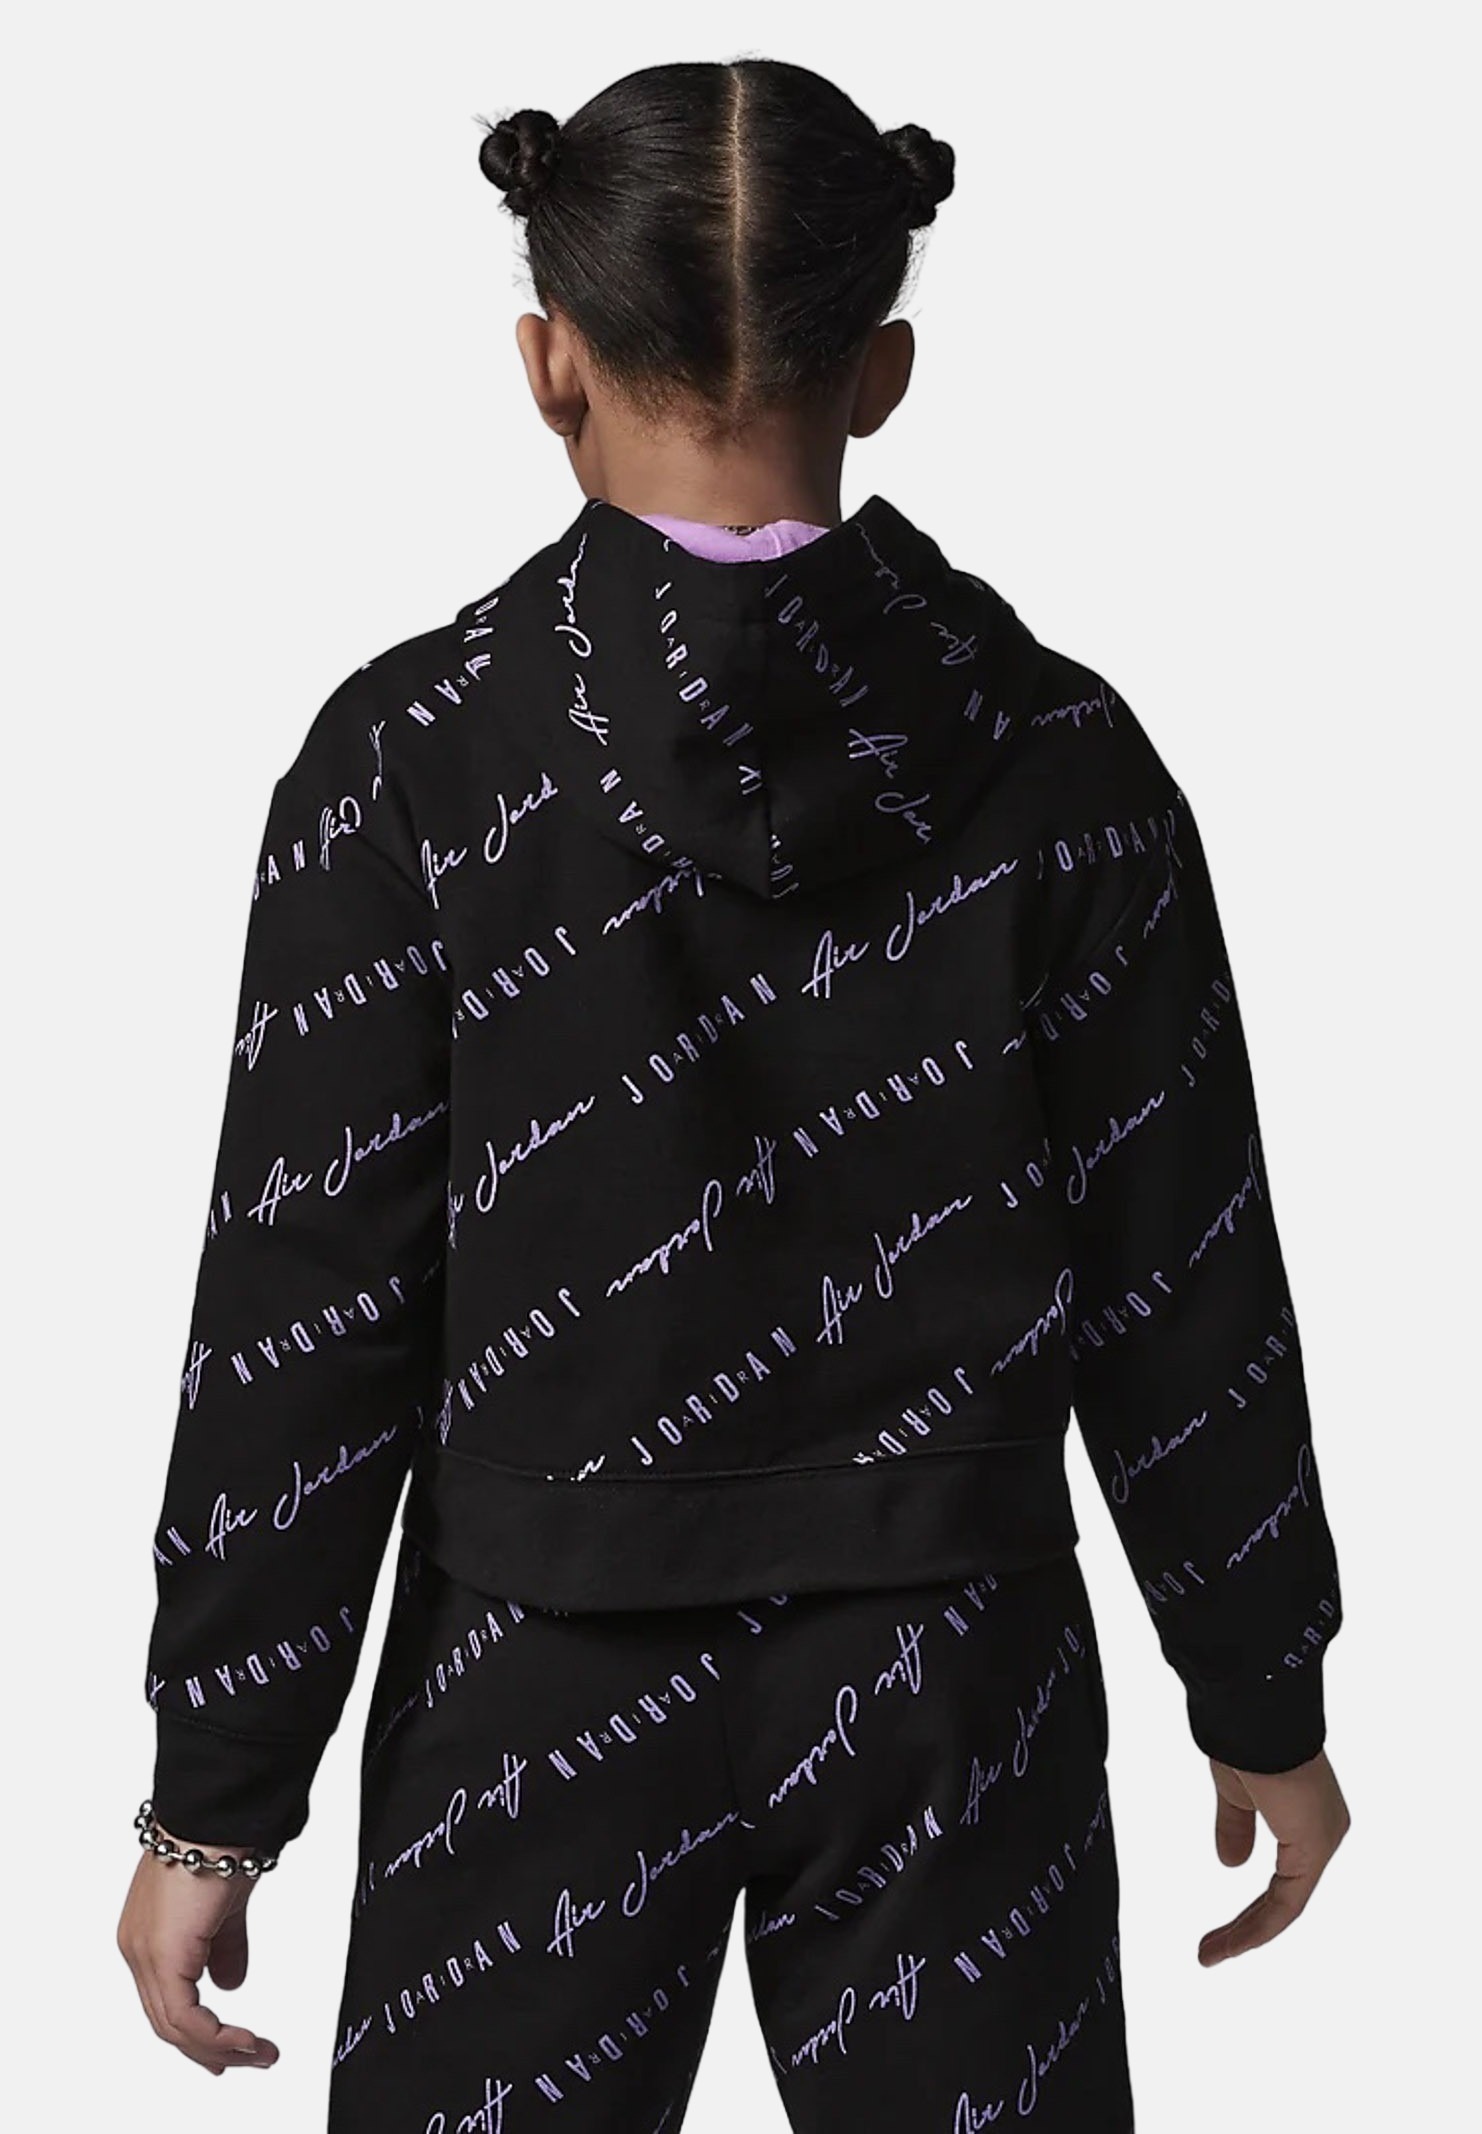 Black girl's sweatshirt with hood and all over logo print NIKE | 45C161023